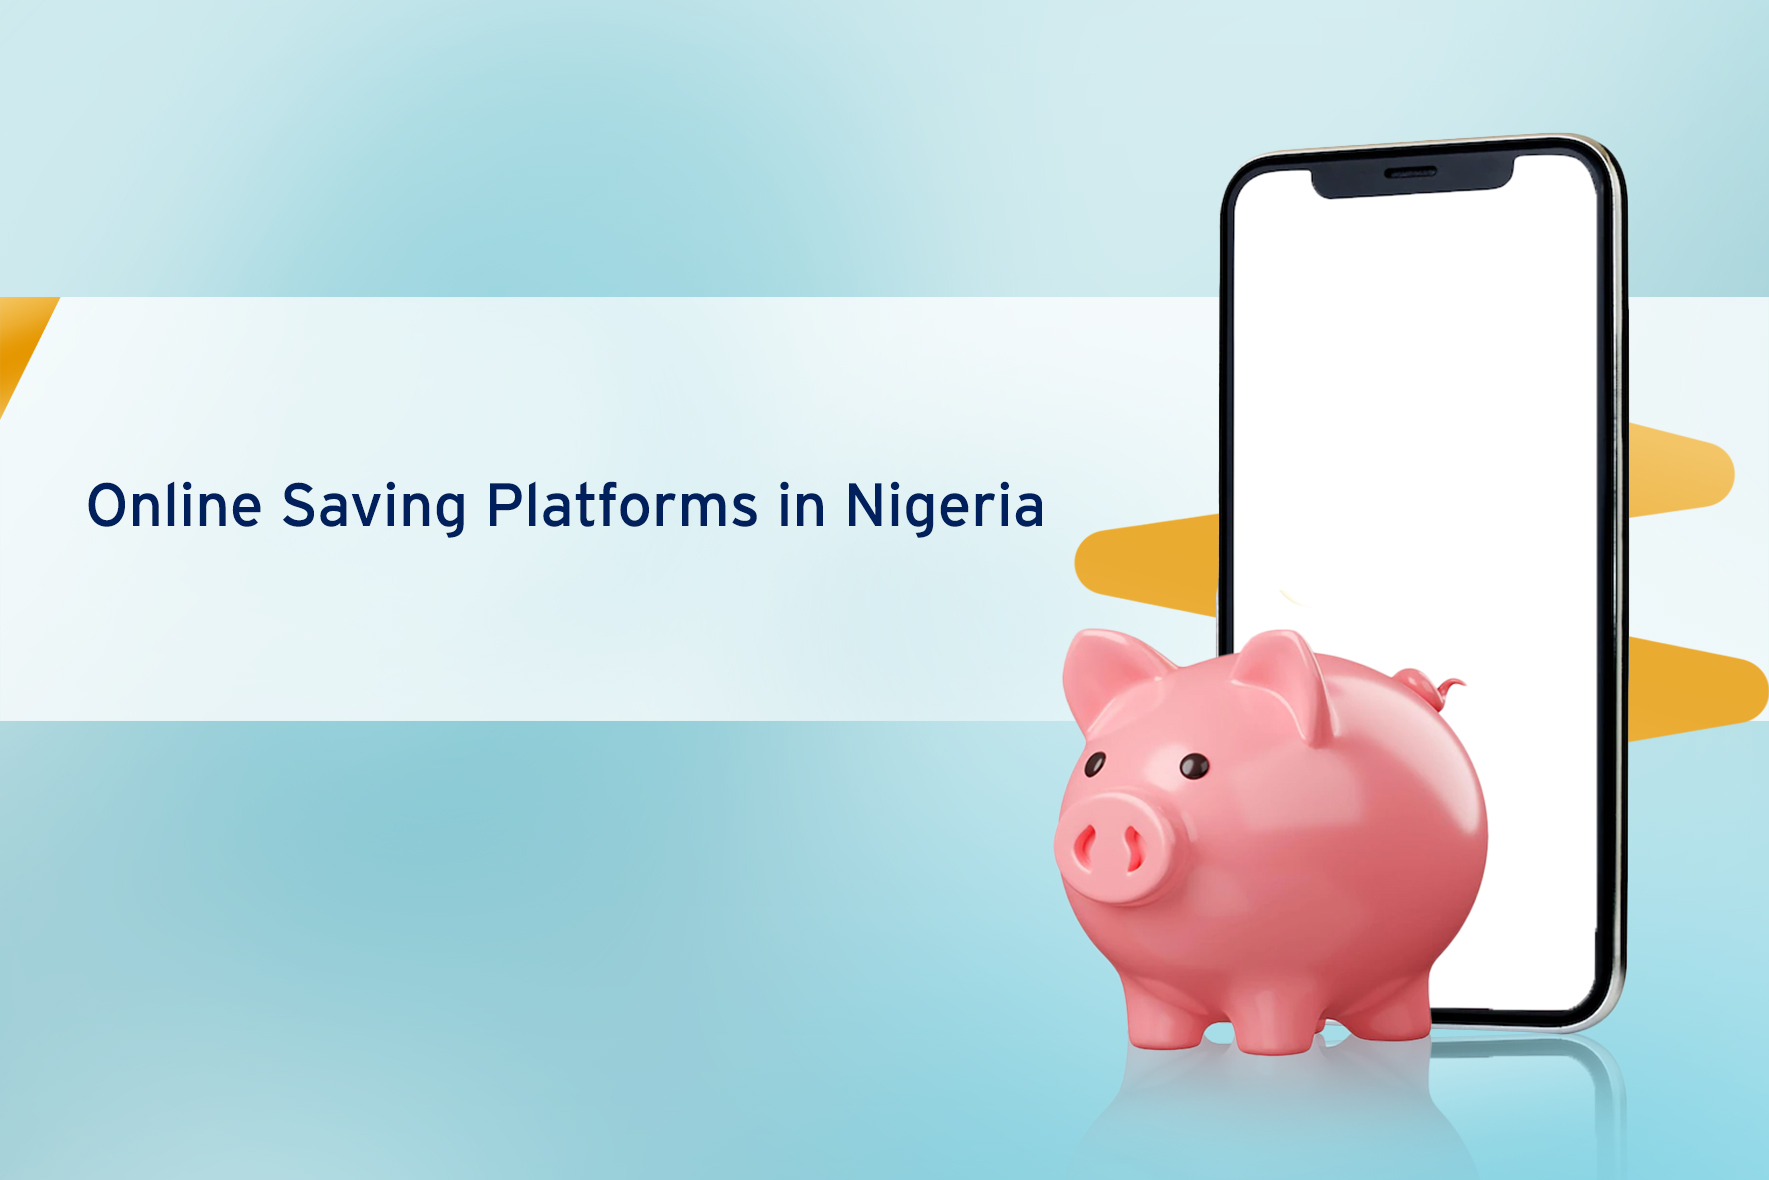 Online savings platforms in Nigeria